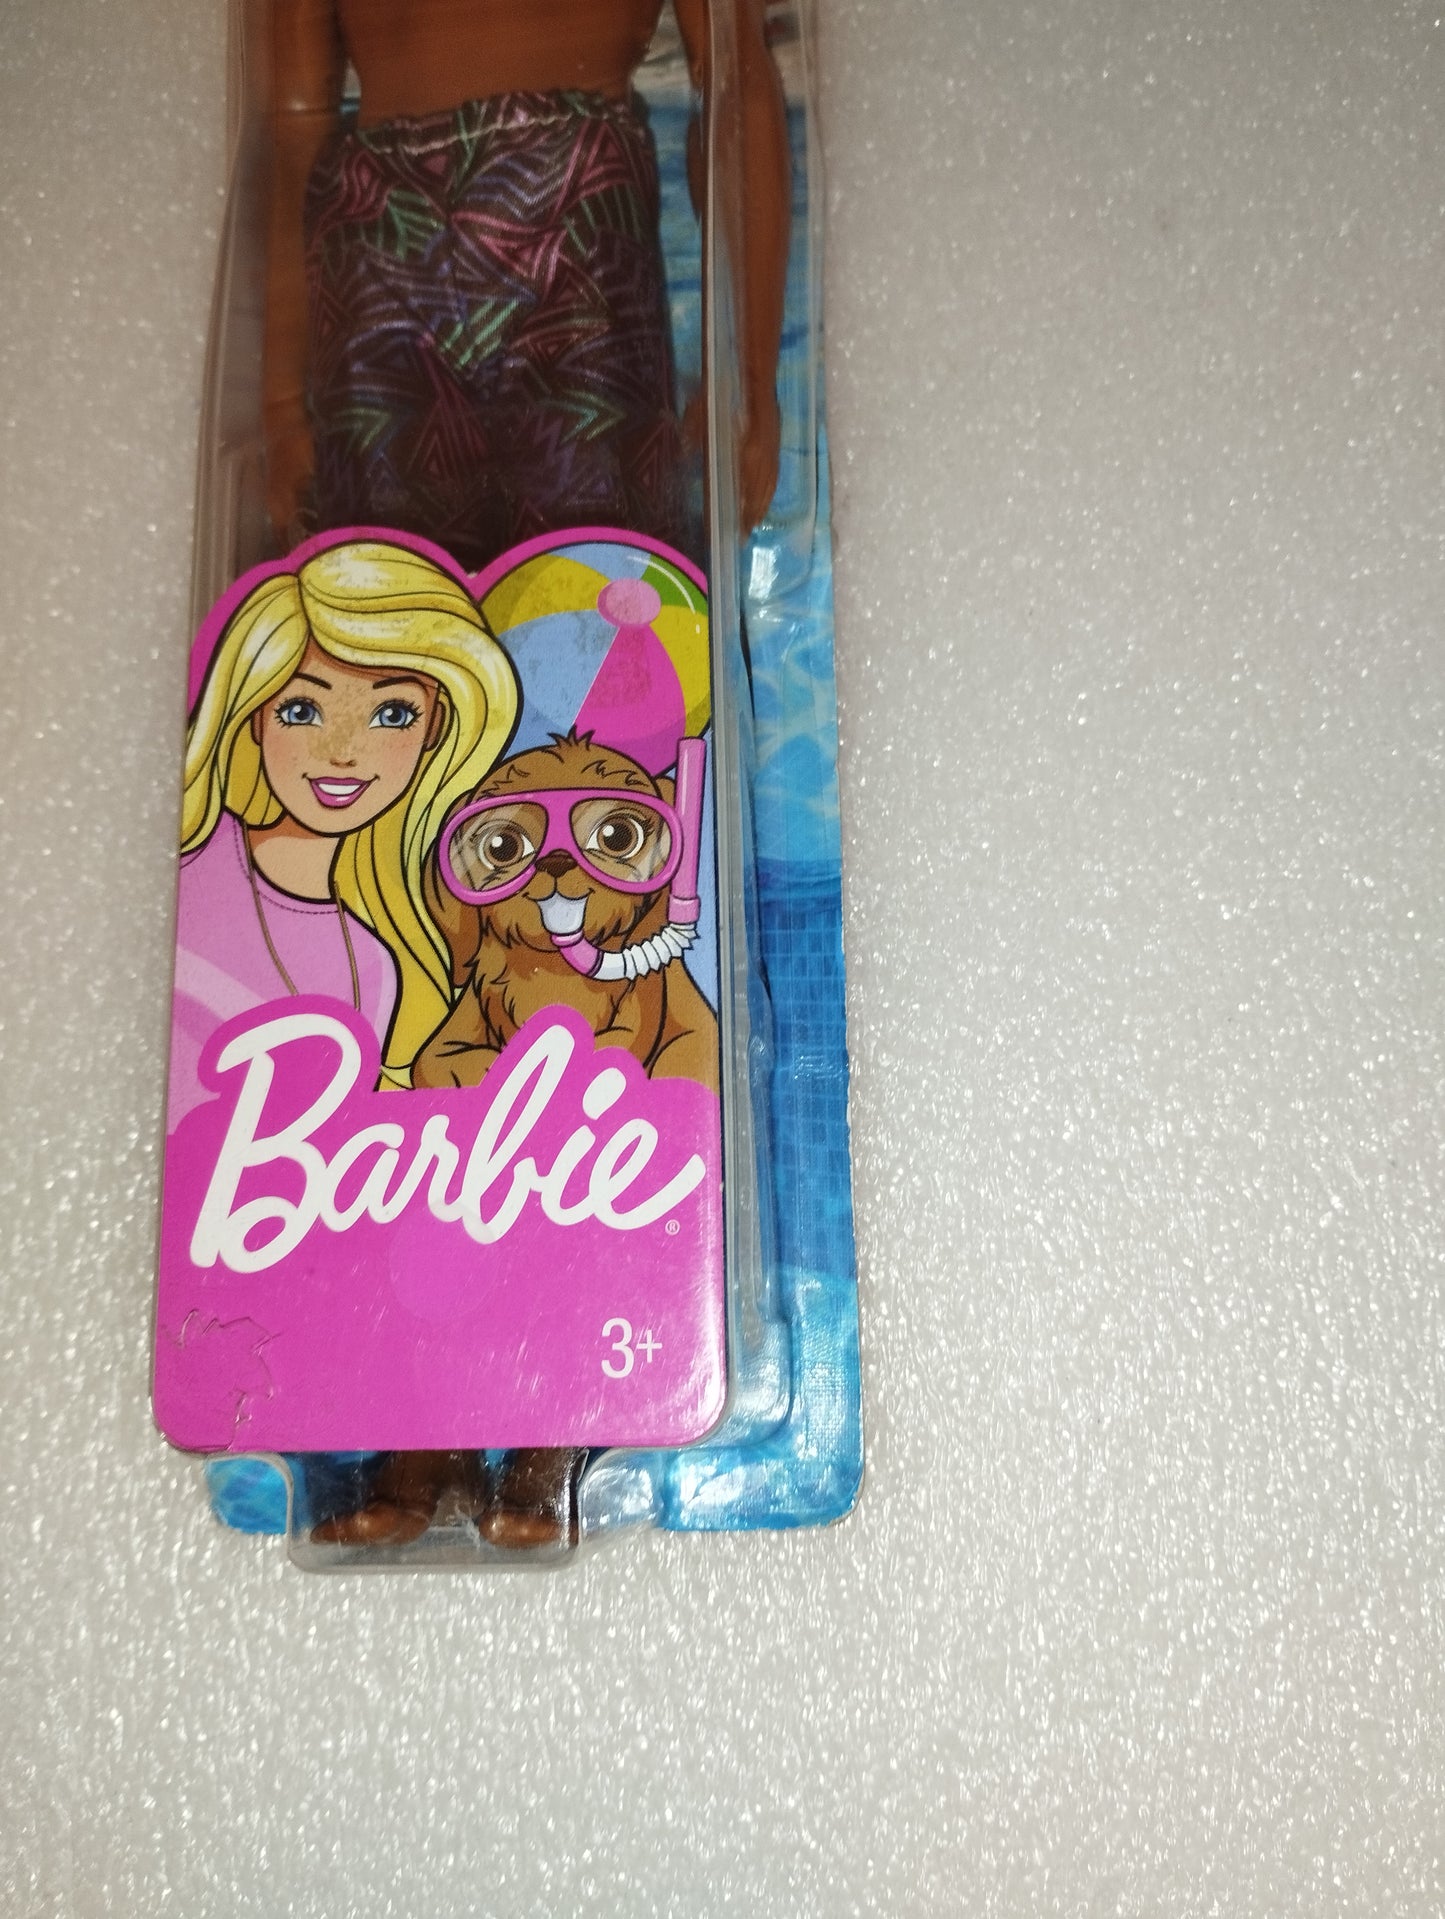 Barbie Bambola Spiaggia

Mattel